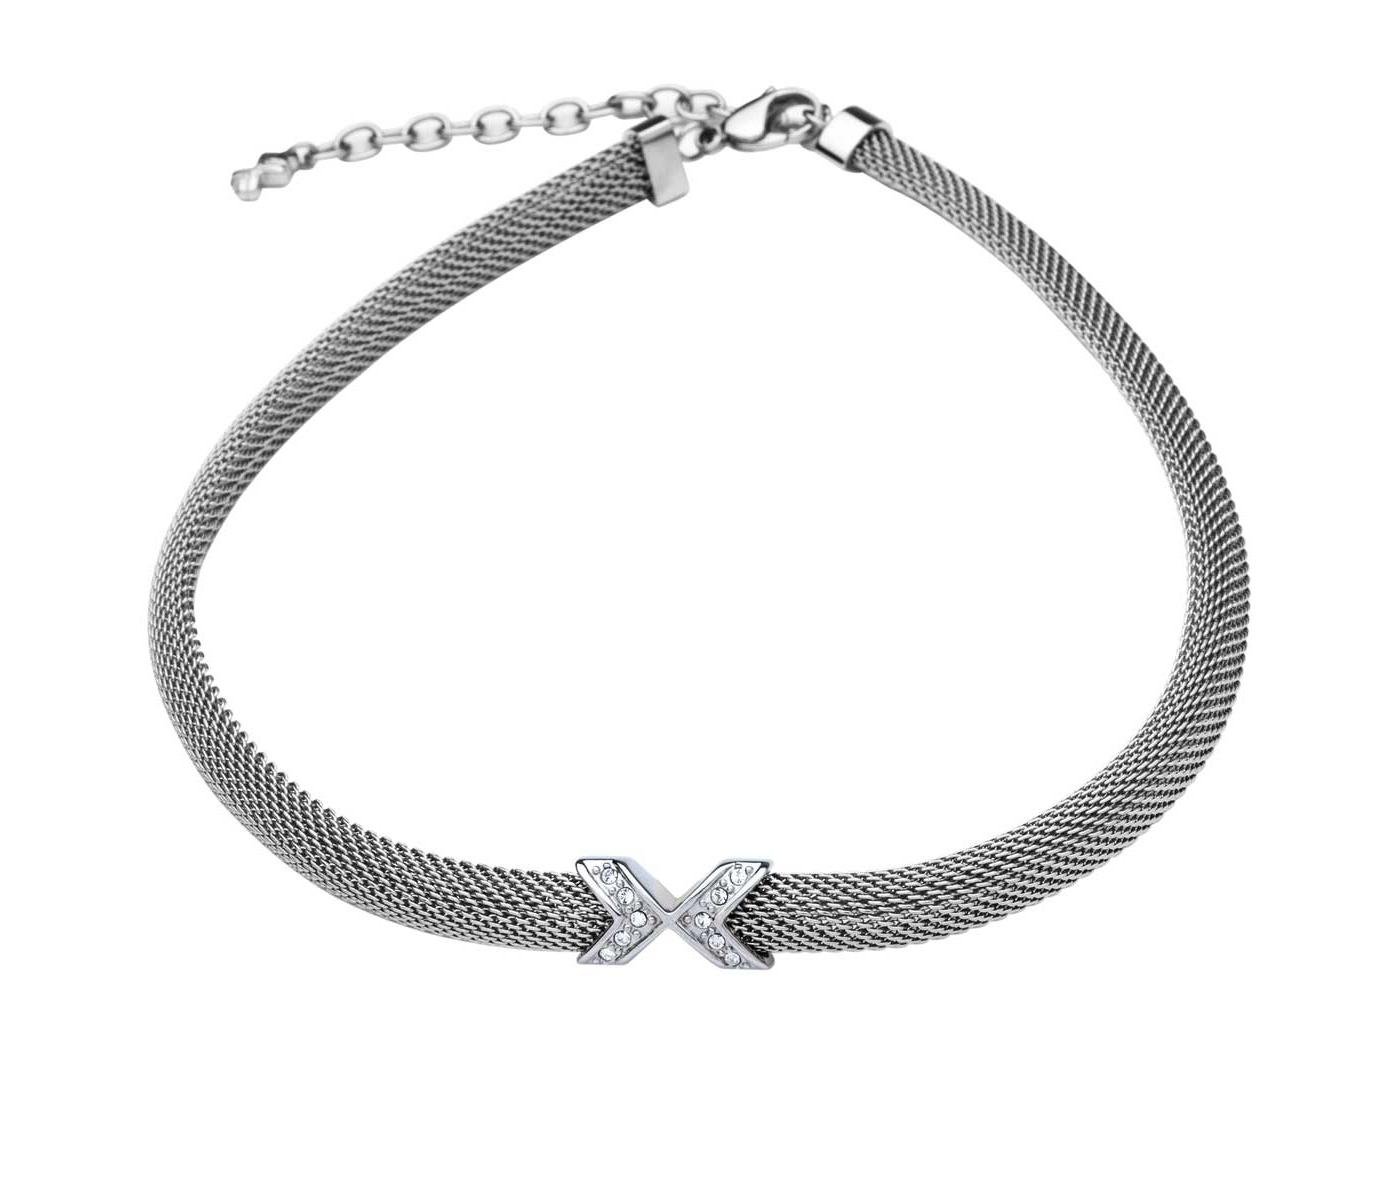 Necklace by Skagen